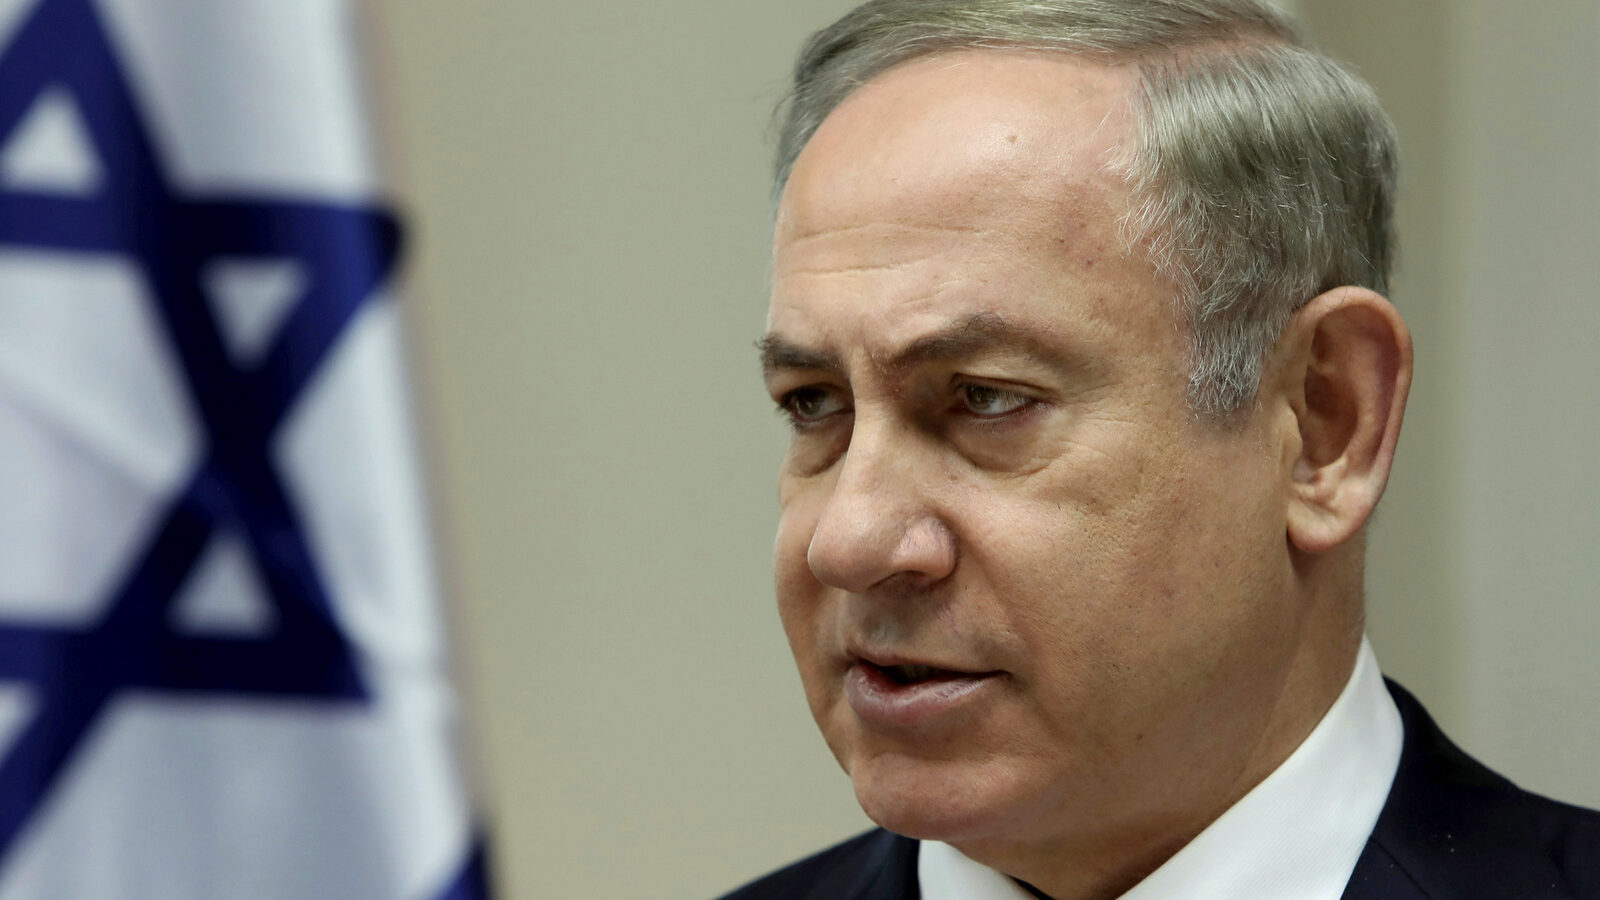 Israeli Prime Minister Benjamin Netanyahu chairs the weekly cabinet meeting in Jerusalem. (Gali Tibbon/AP)